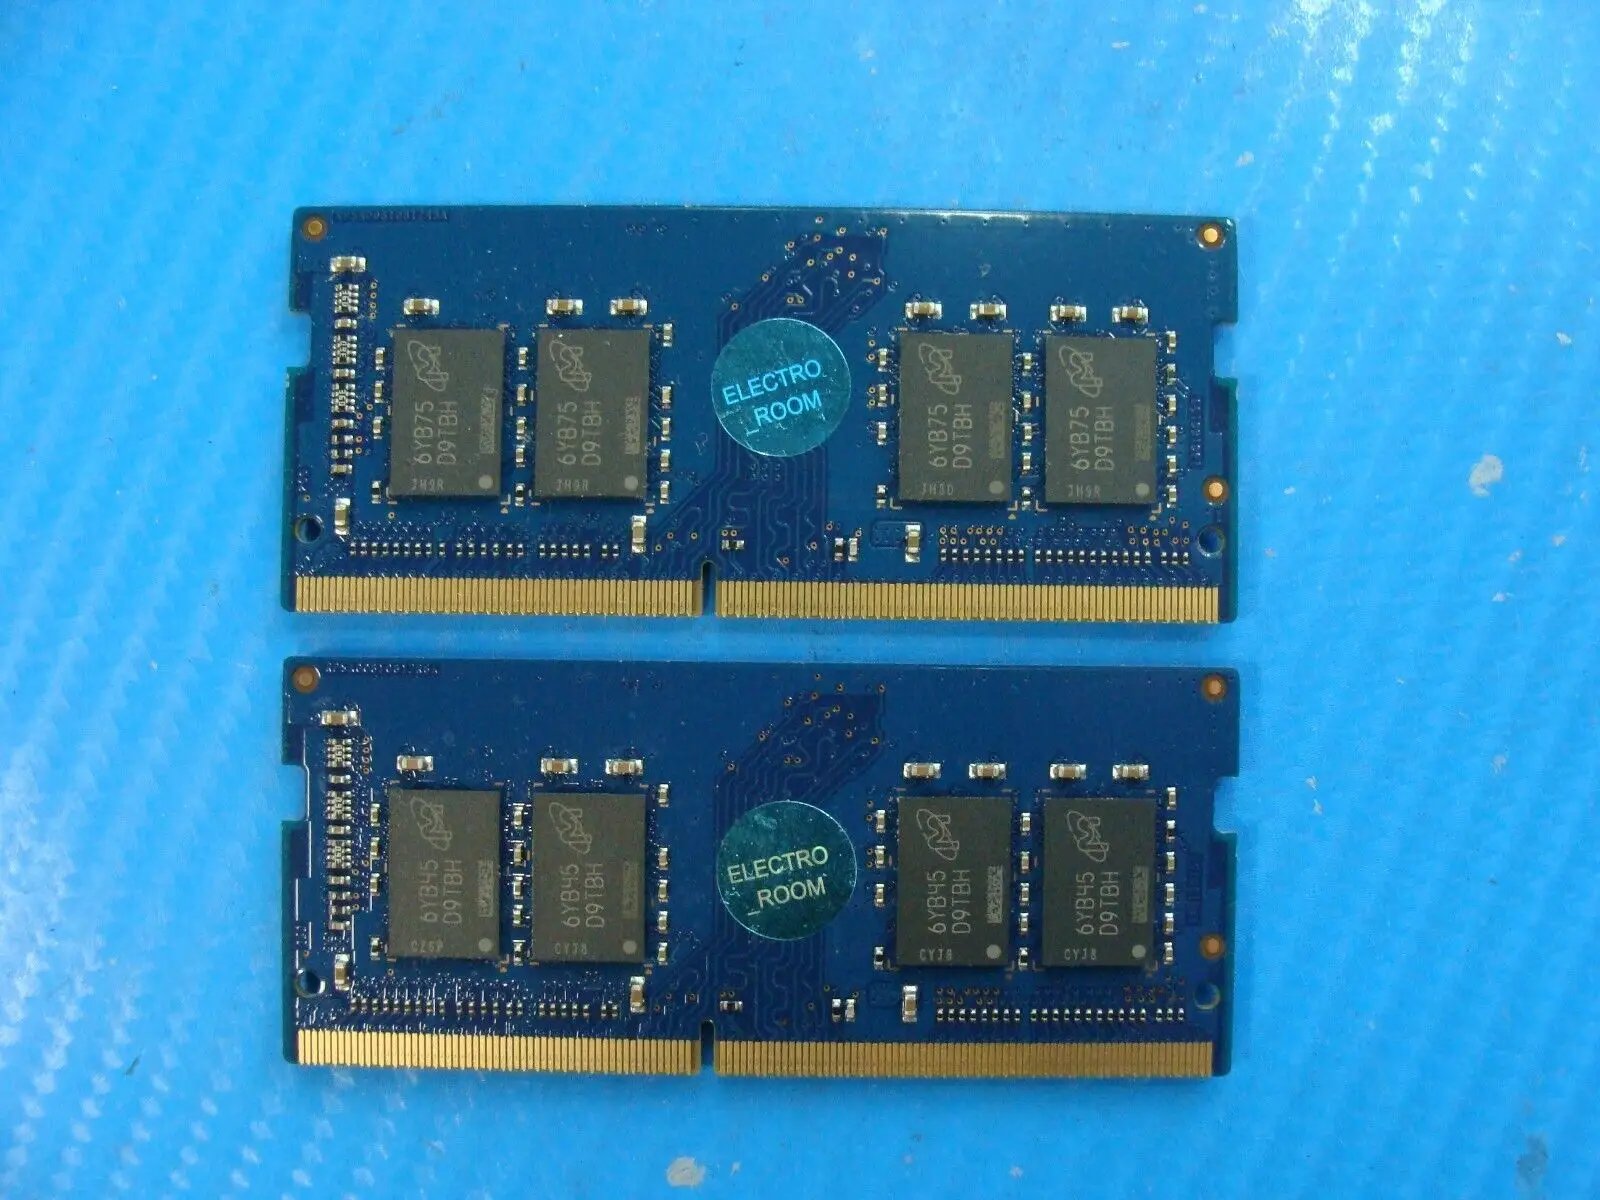 Lenovo Y700-15ISK So-Dimm Ramaxel 16Gb (2x8Gb) Memory Ram RMSA3260NA78HAF-2400